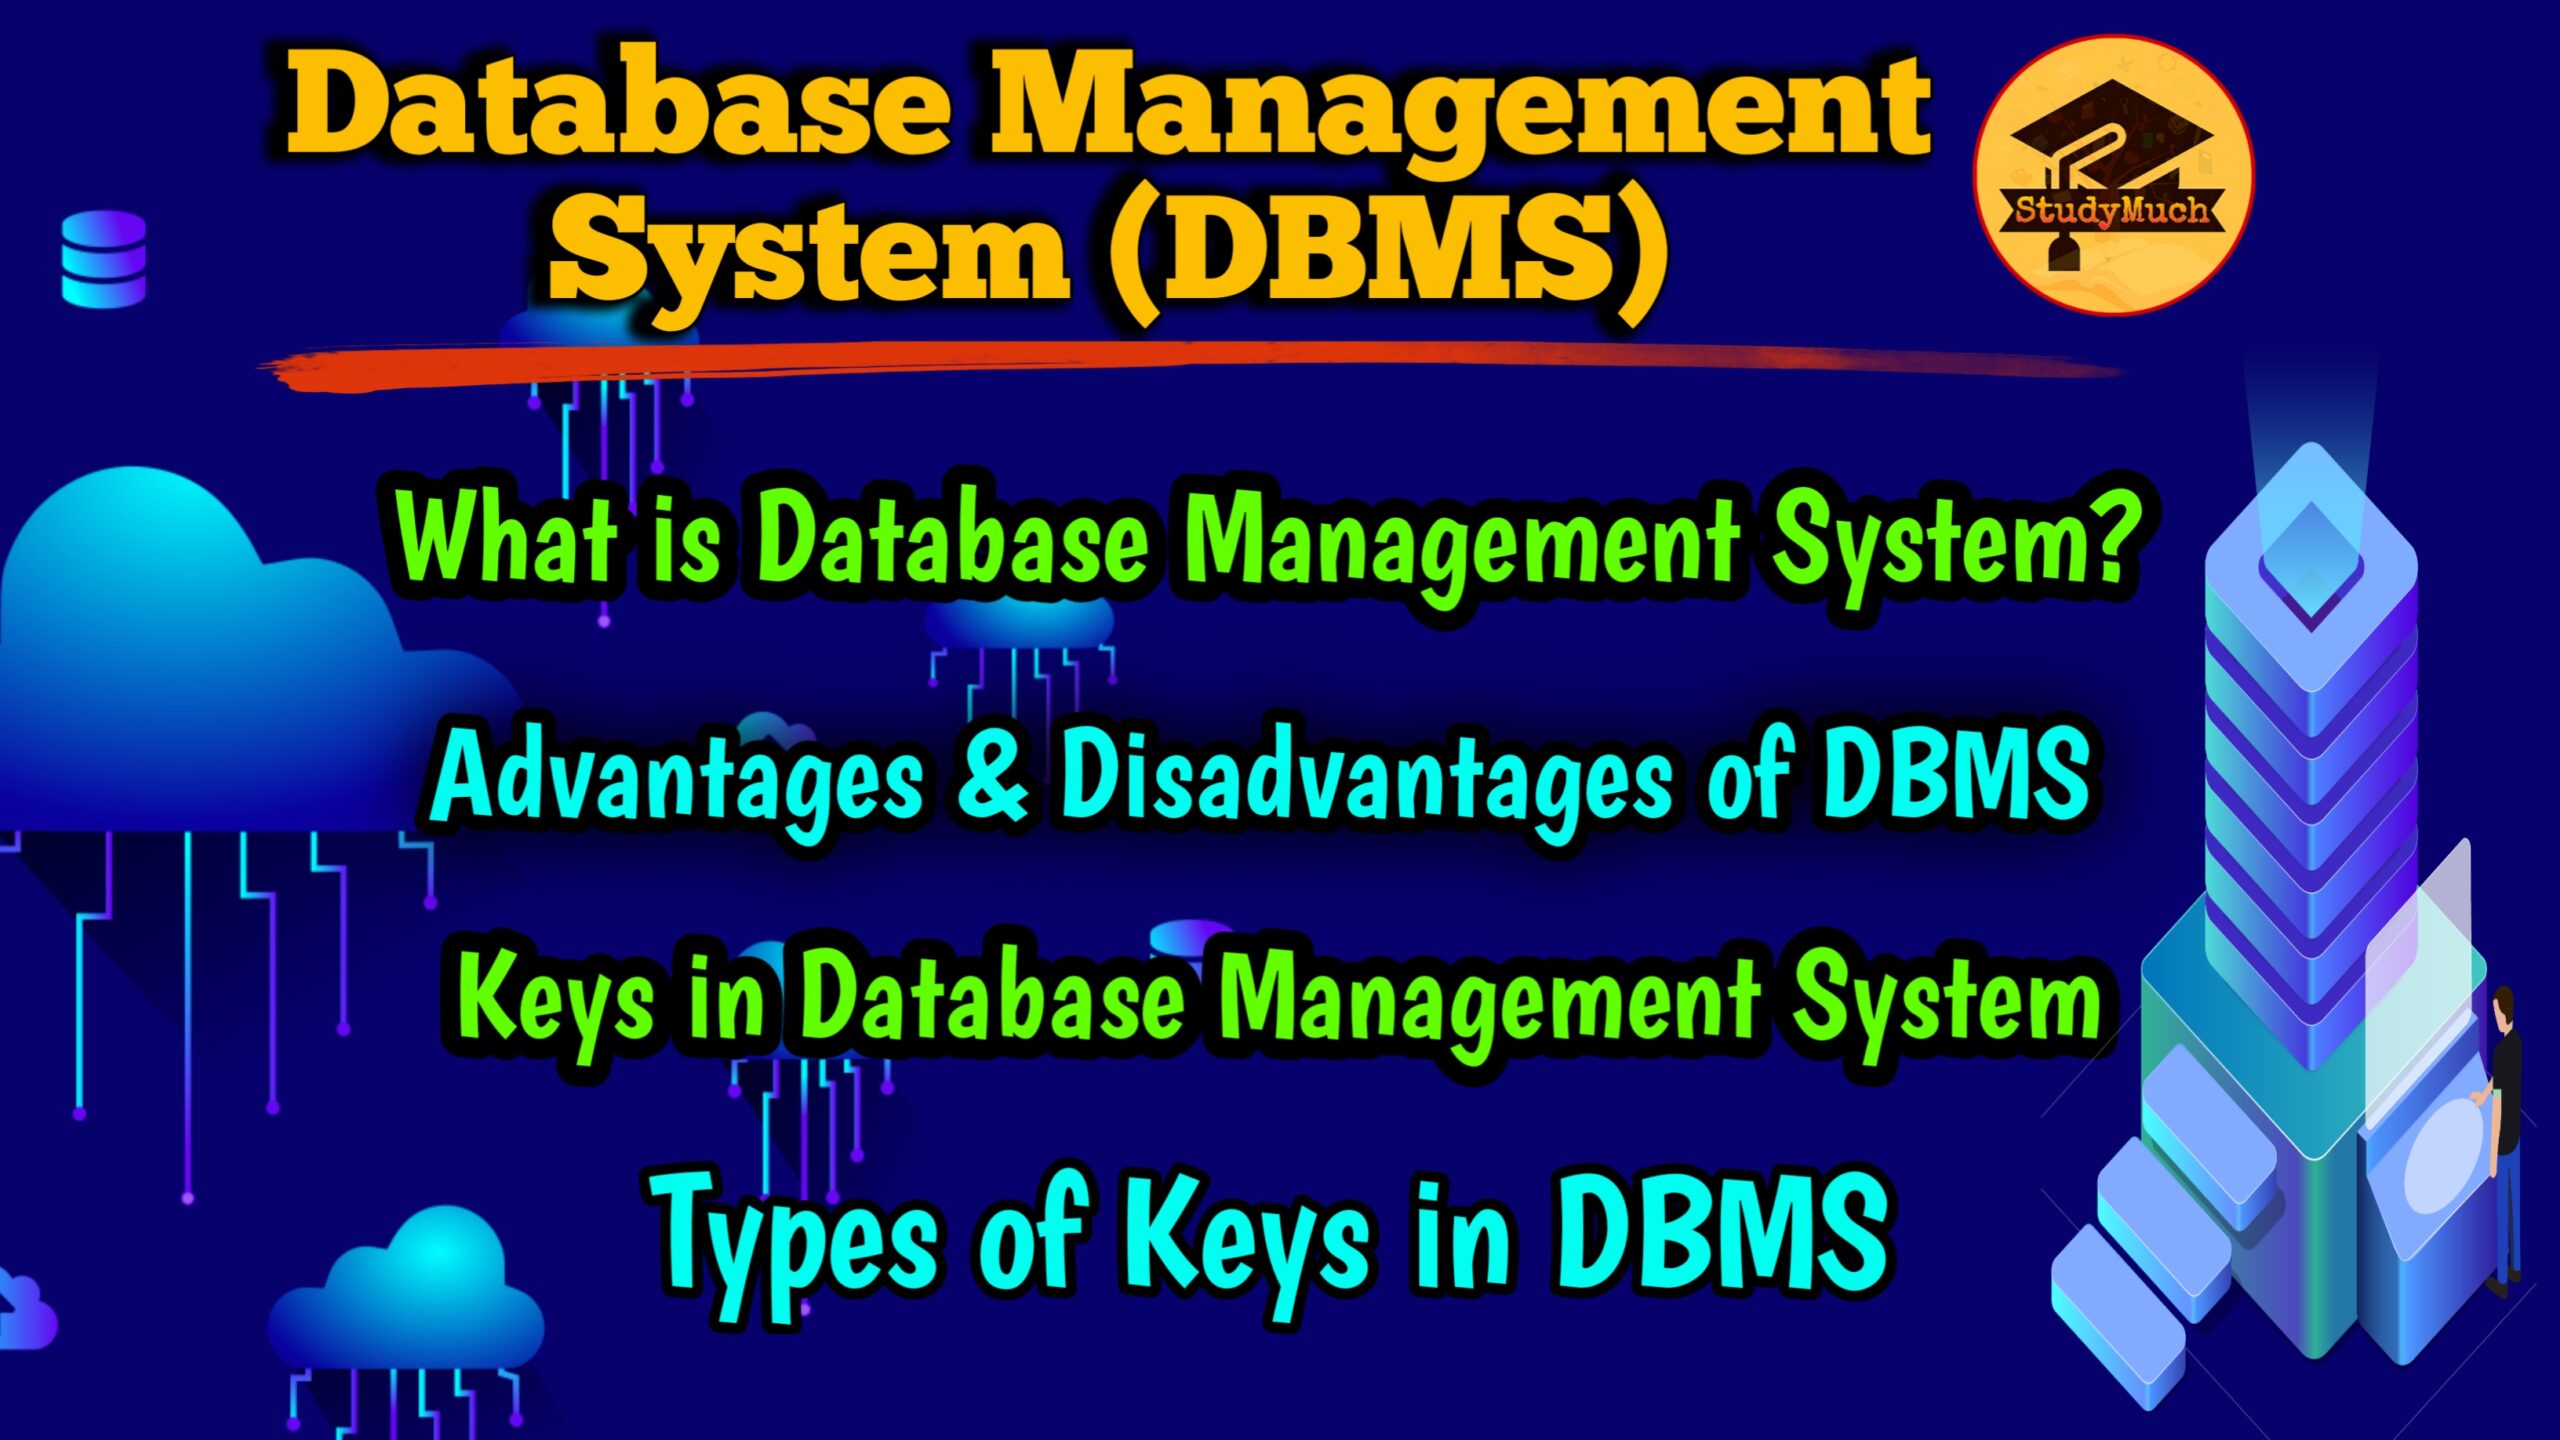 Database Management System studymuch